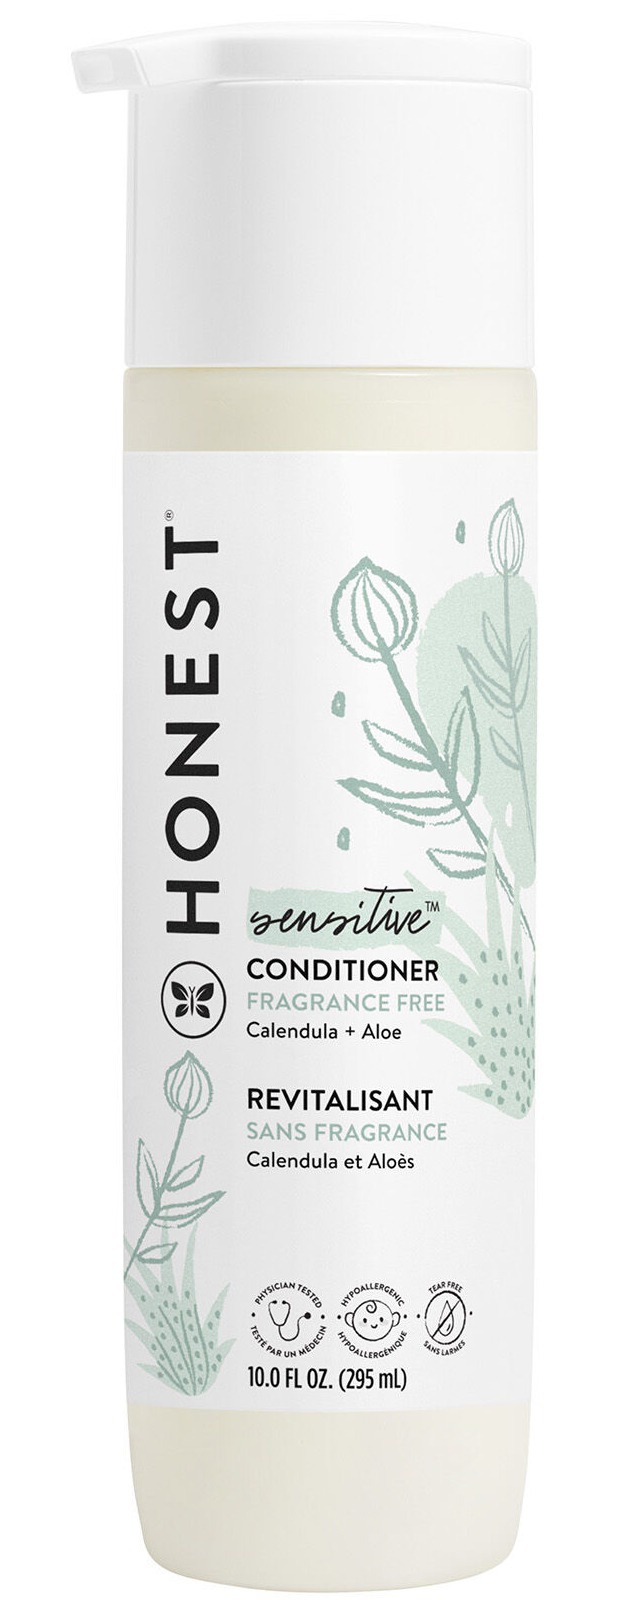 The Honest Company Sensitive Conditioner Fragrance Free